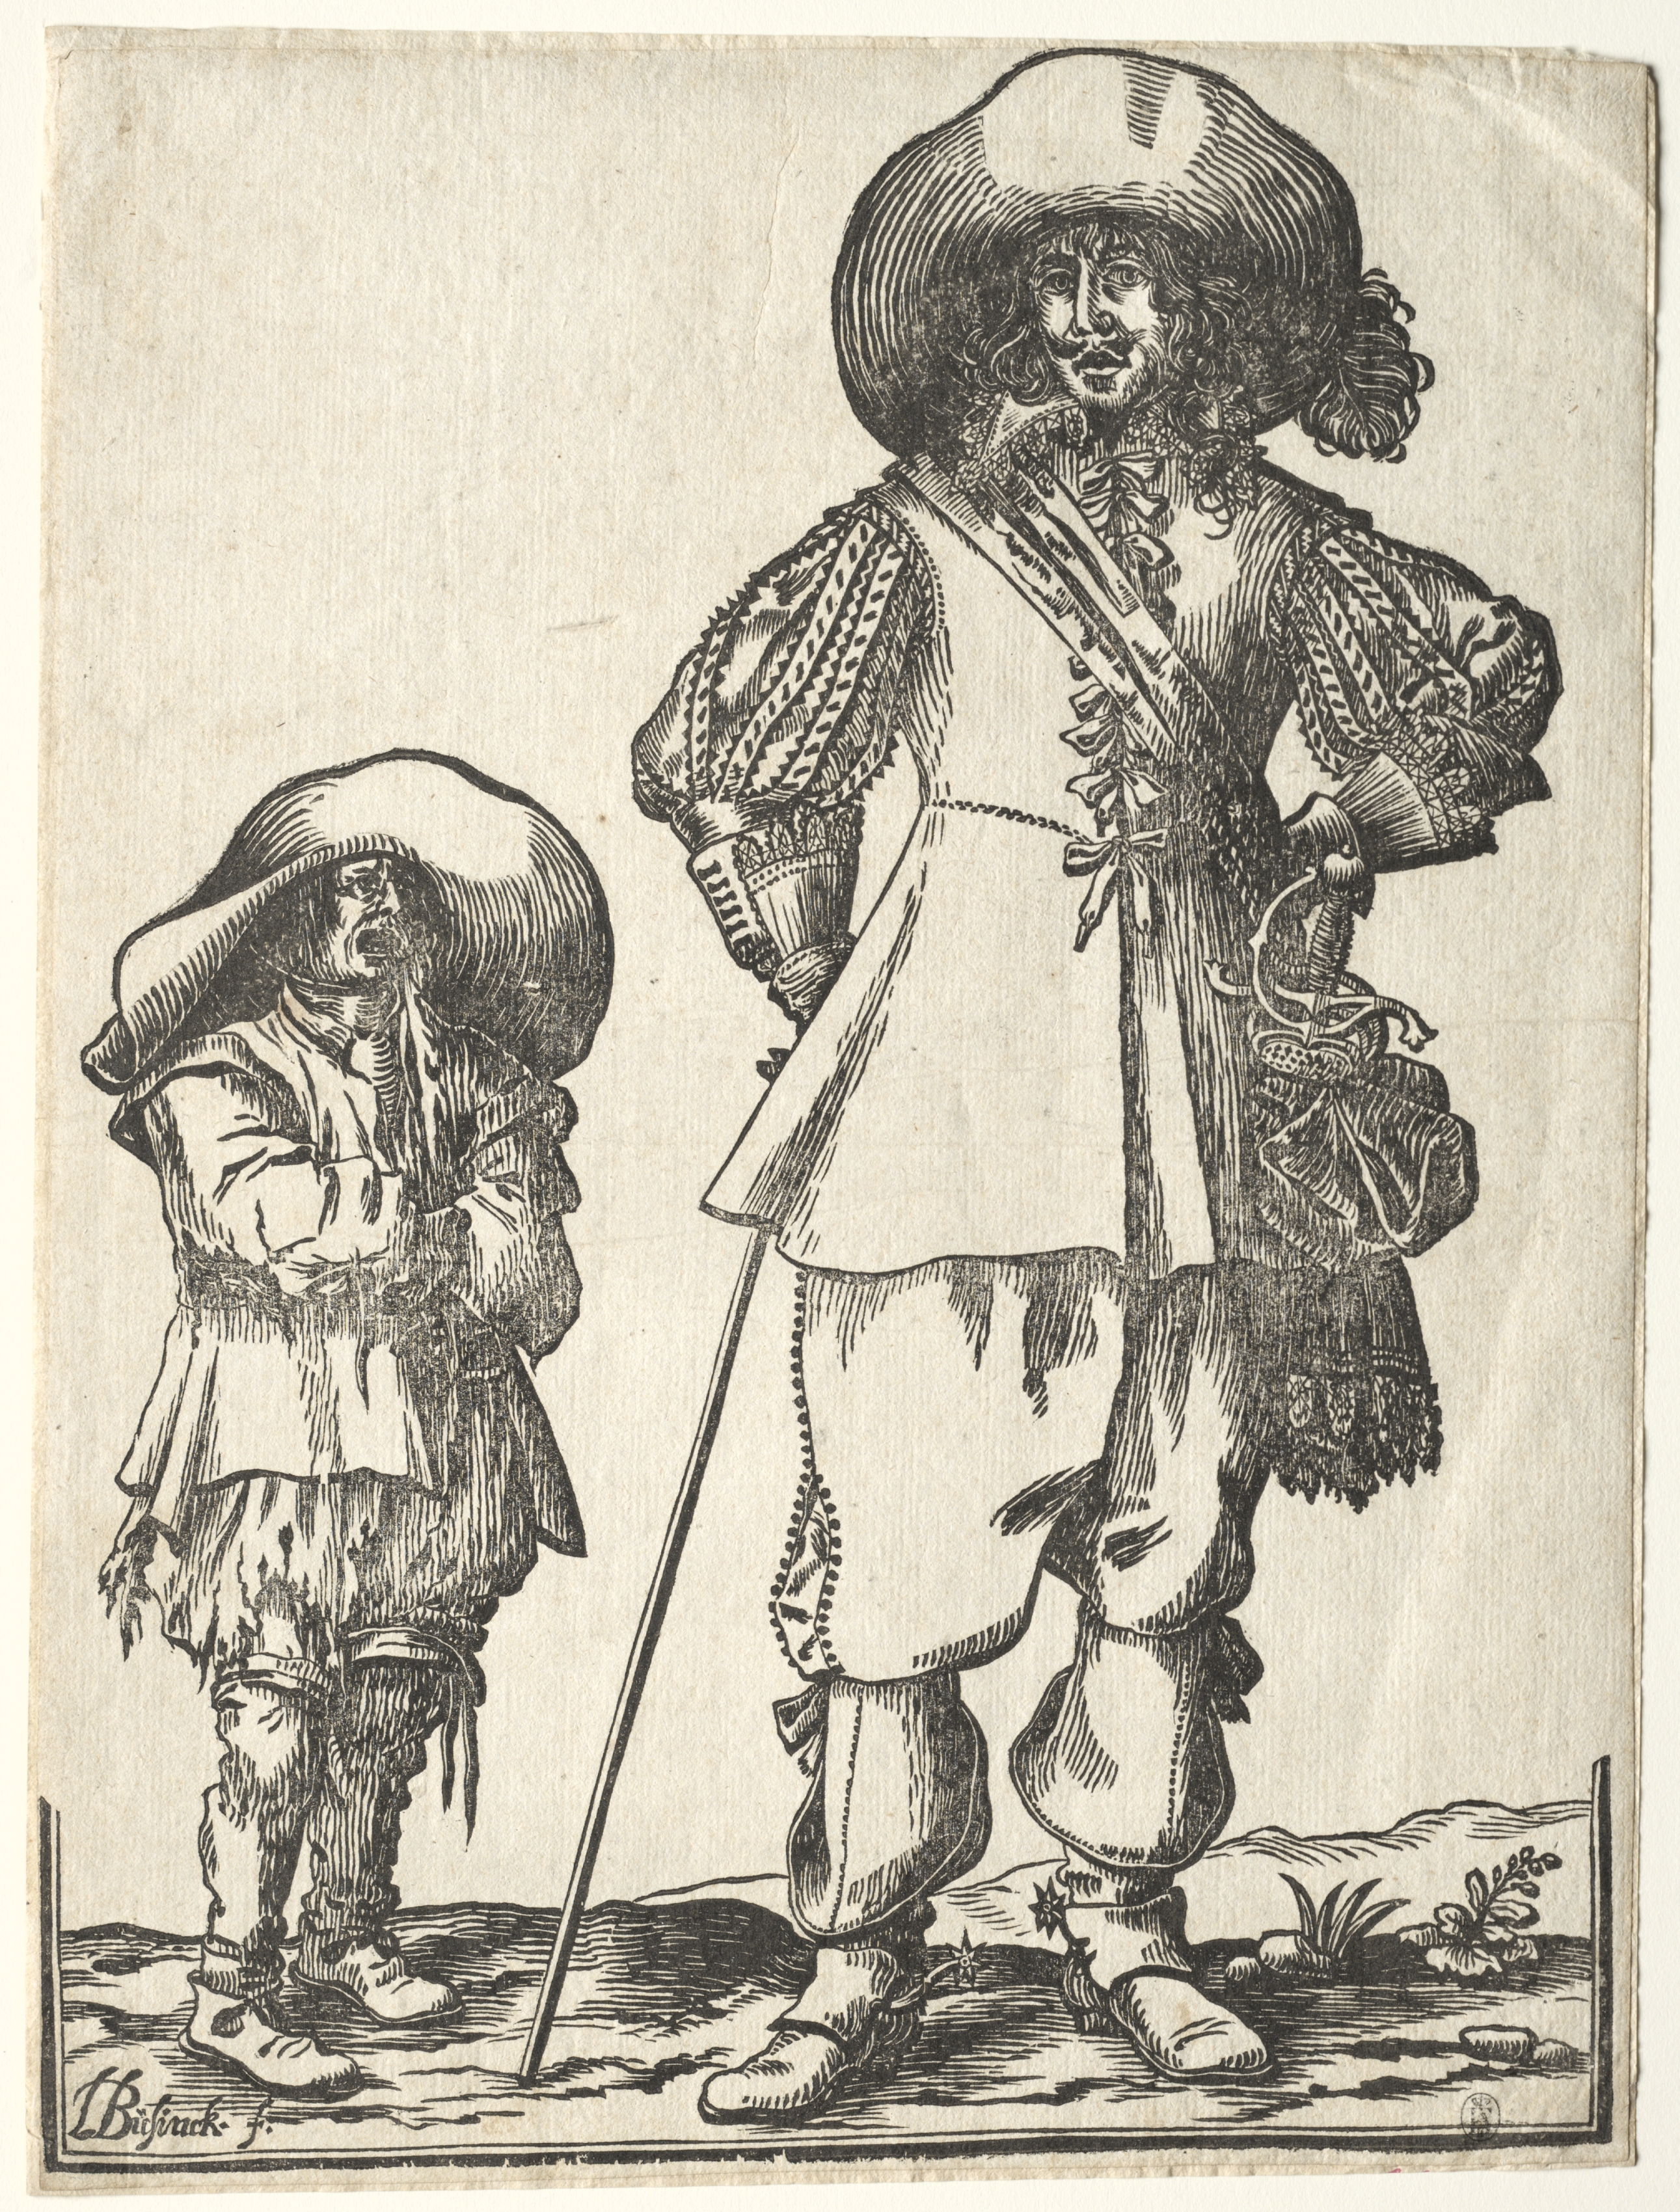 Standing Cavalier and Beggar Boy